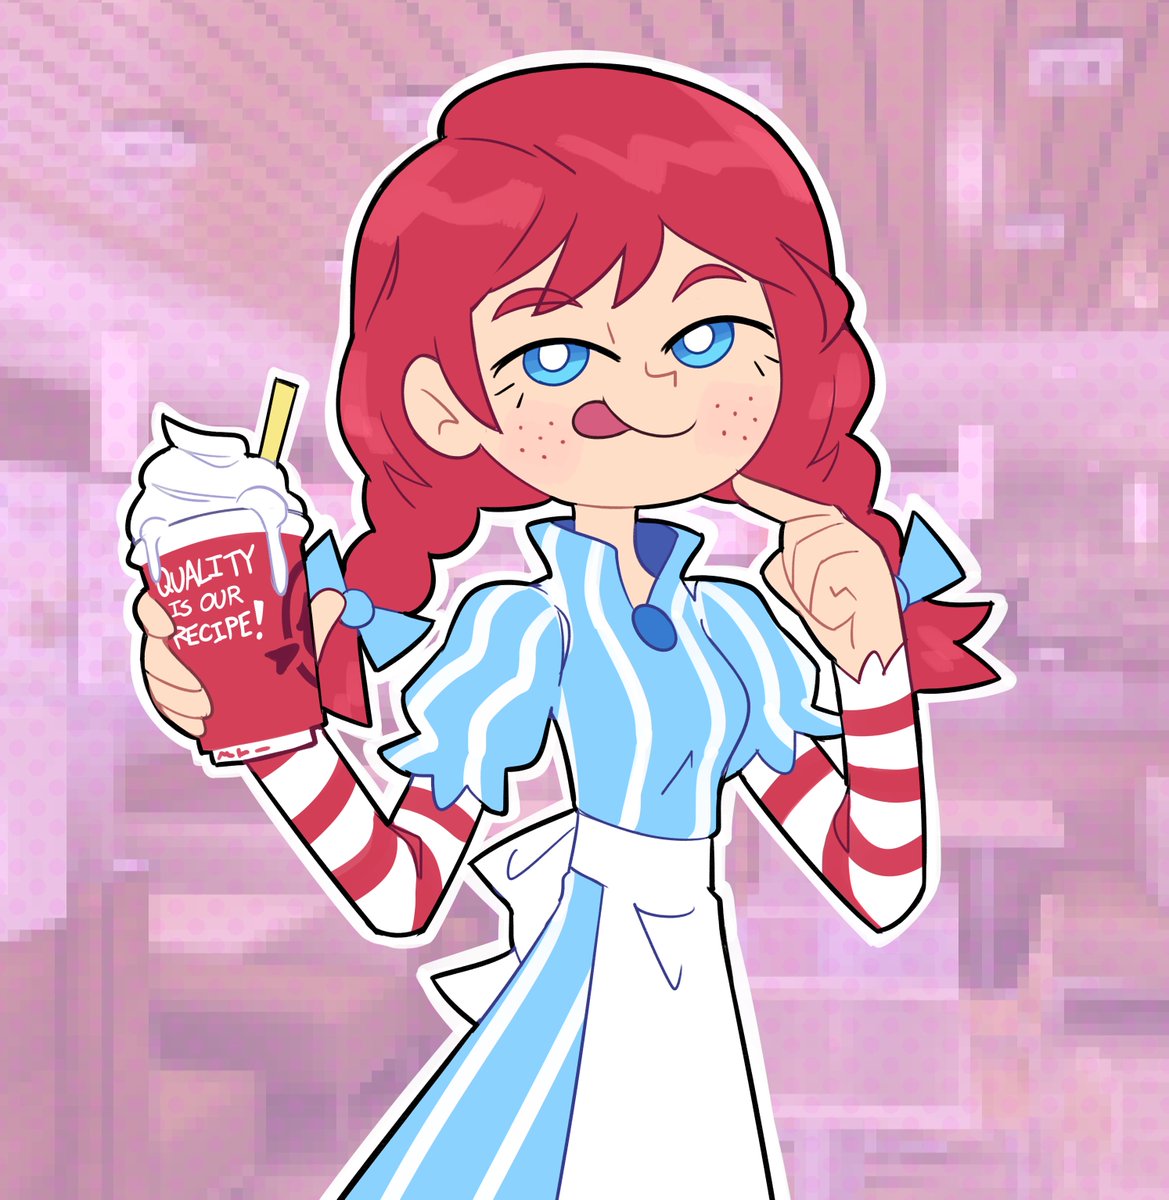 Wendy's Milkshake! She made it herself!